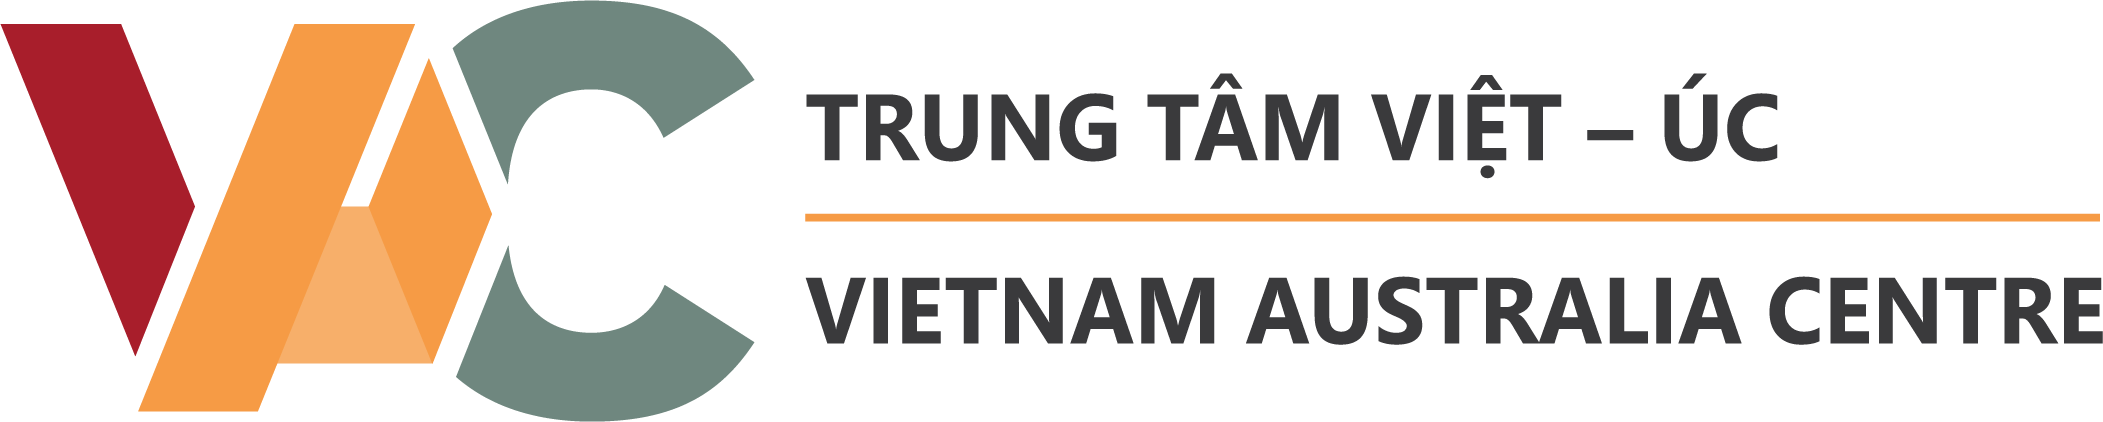 Vietnam Australia Centre